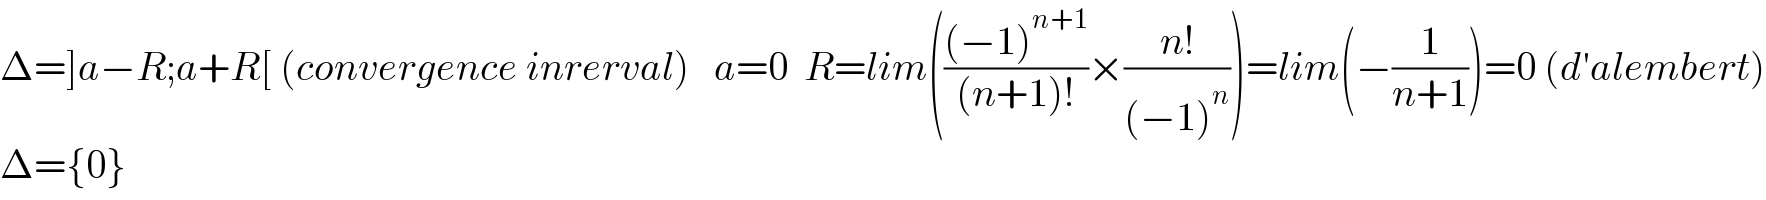 Δ=]a−R;a+R[ (convergence inrerval)   a=0  R=lim((((−1)^(n+1) )/((n+1)!))×((n!)/((−1)^n )))=lim(−(1/(n+1)))=0 (d′alembert)  Δ={0}  